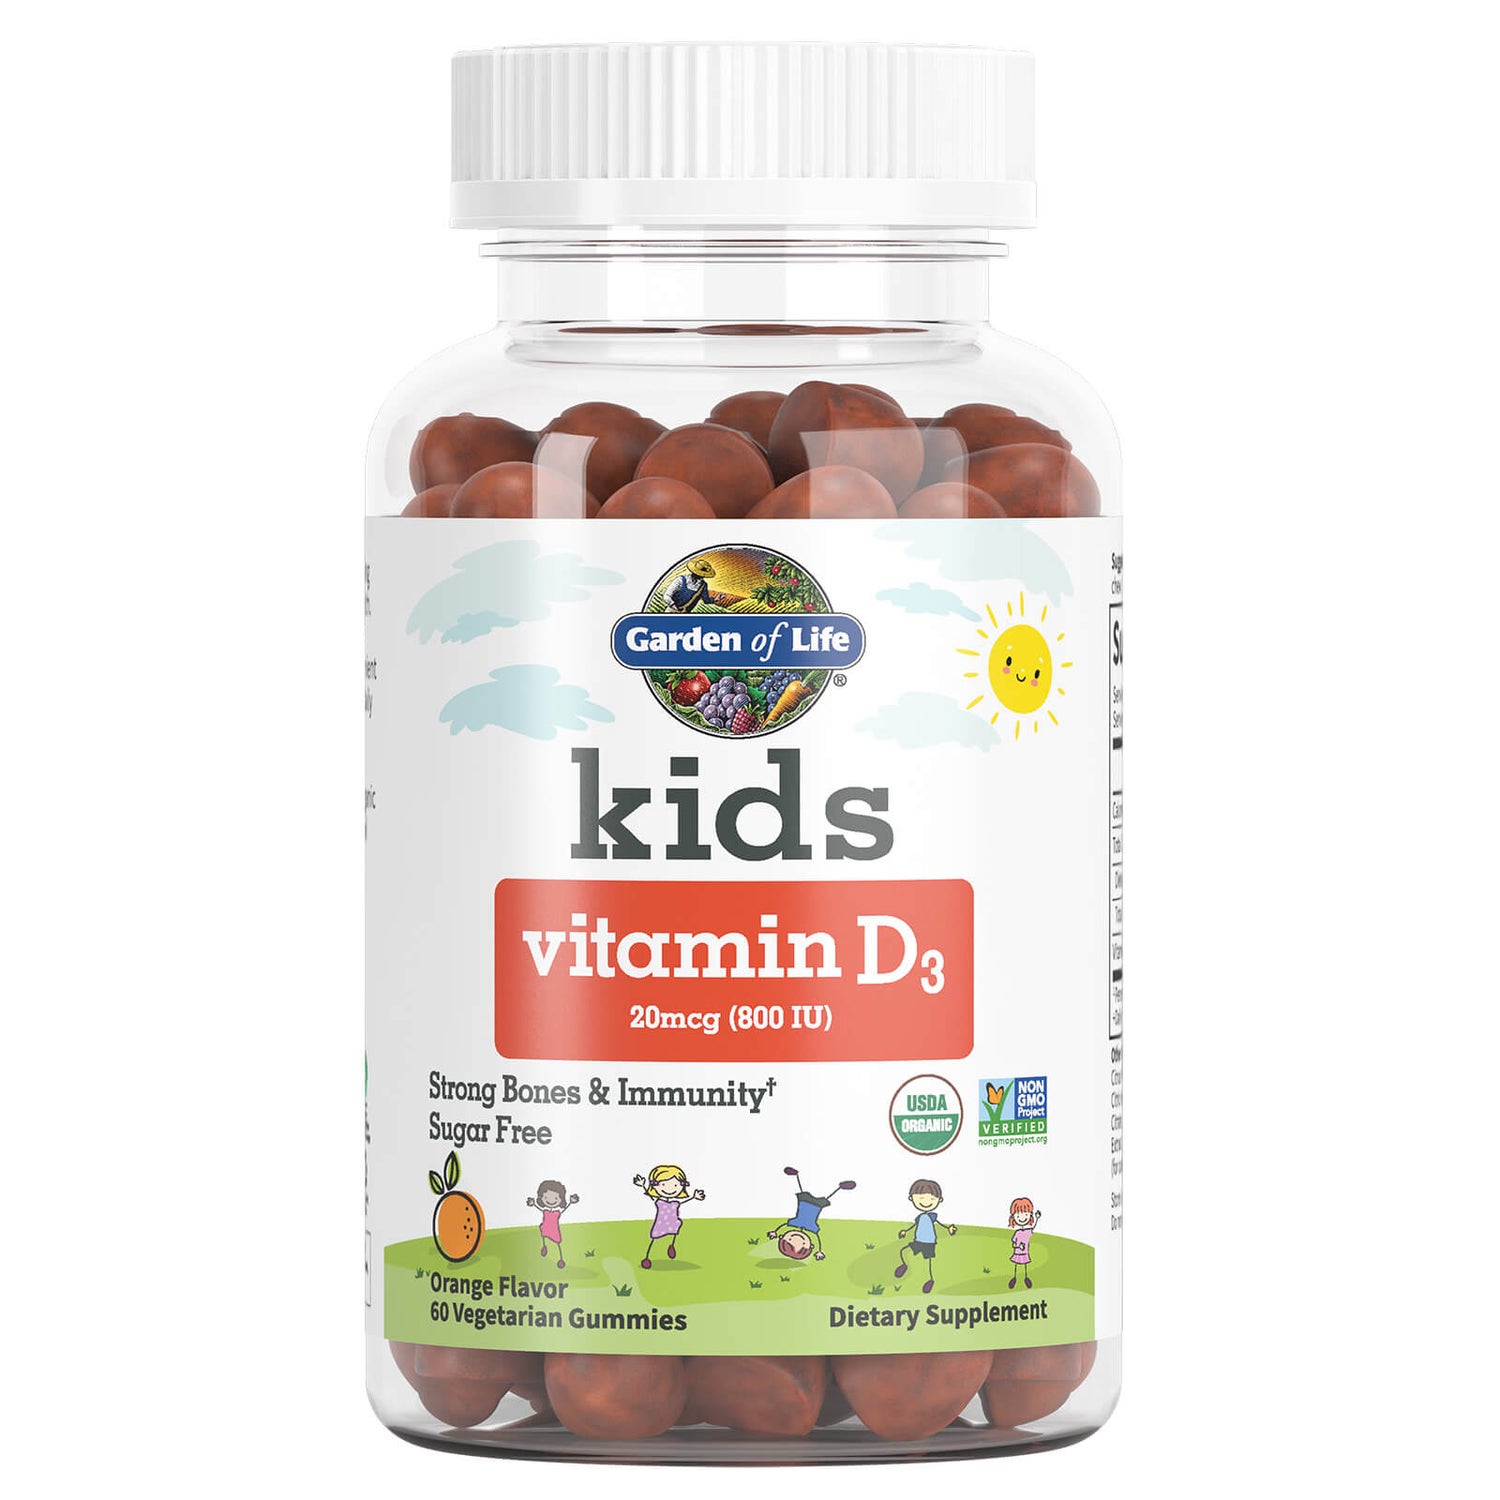 Vitamina D3 bambini 20 mcg (800 UI) - arancia - 60 CARAMELLE GOMMOSE